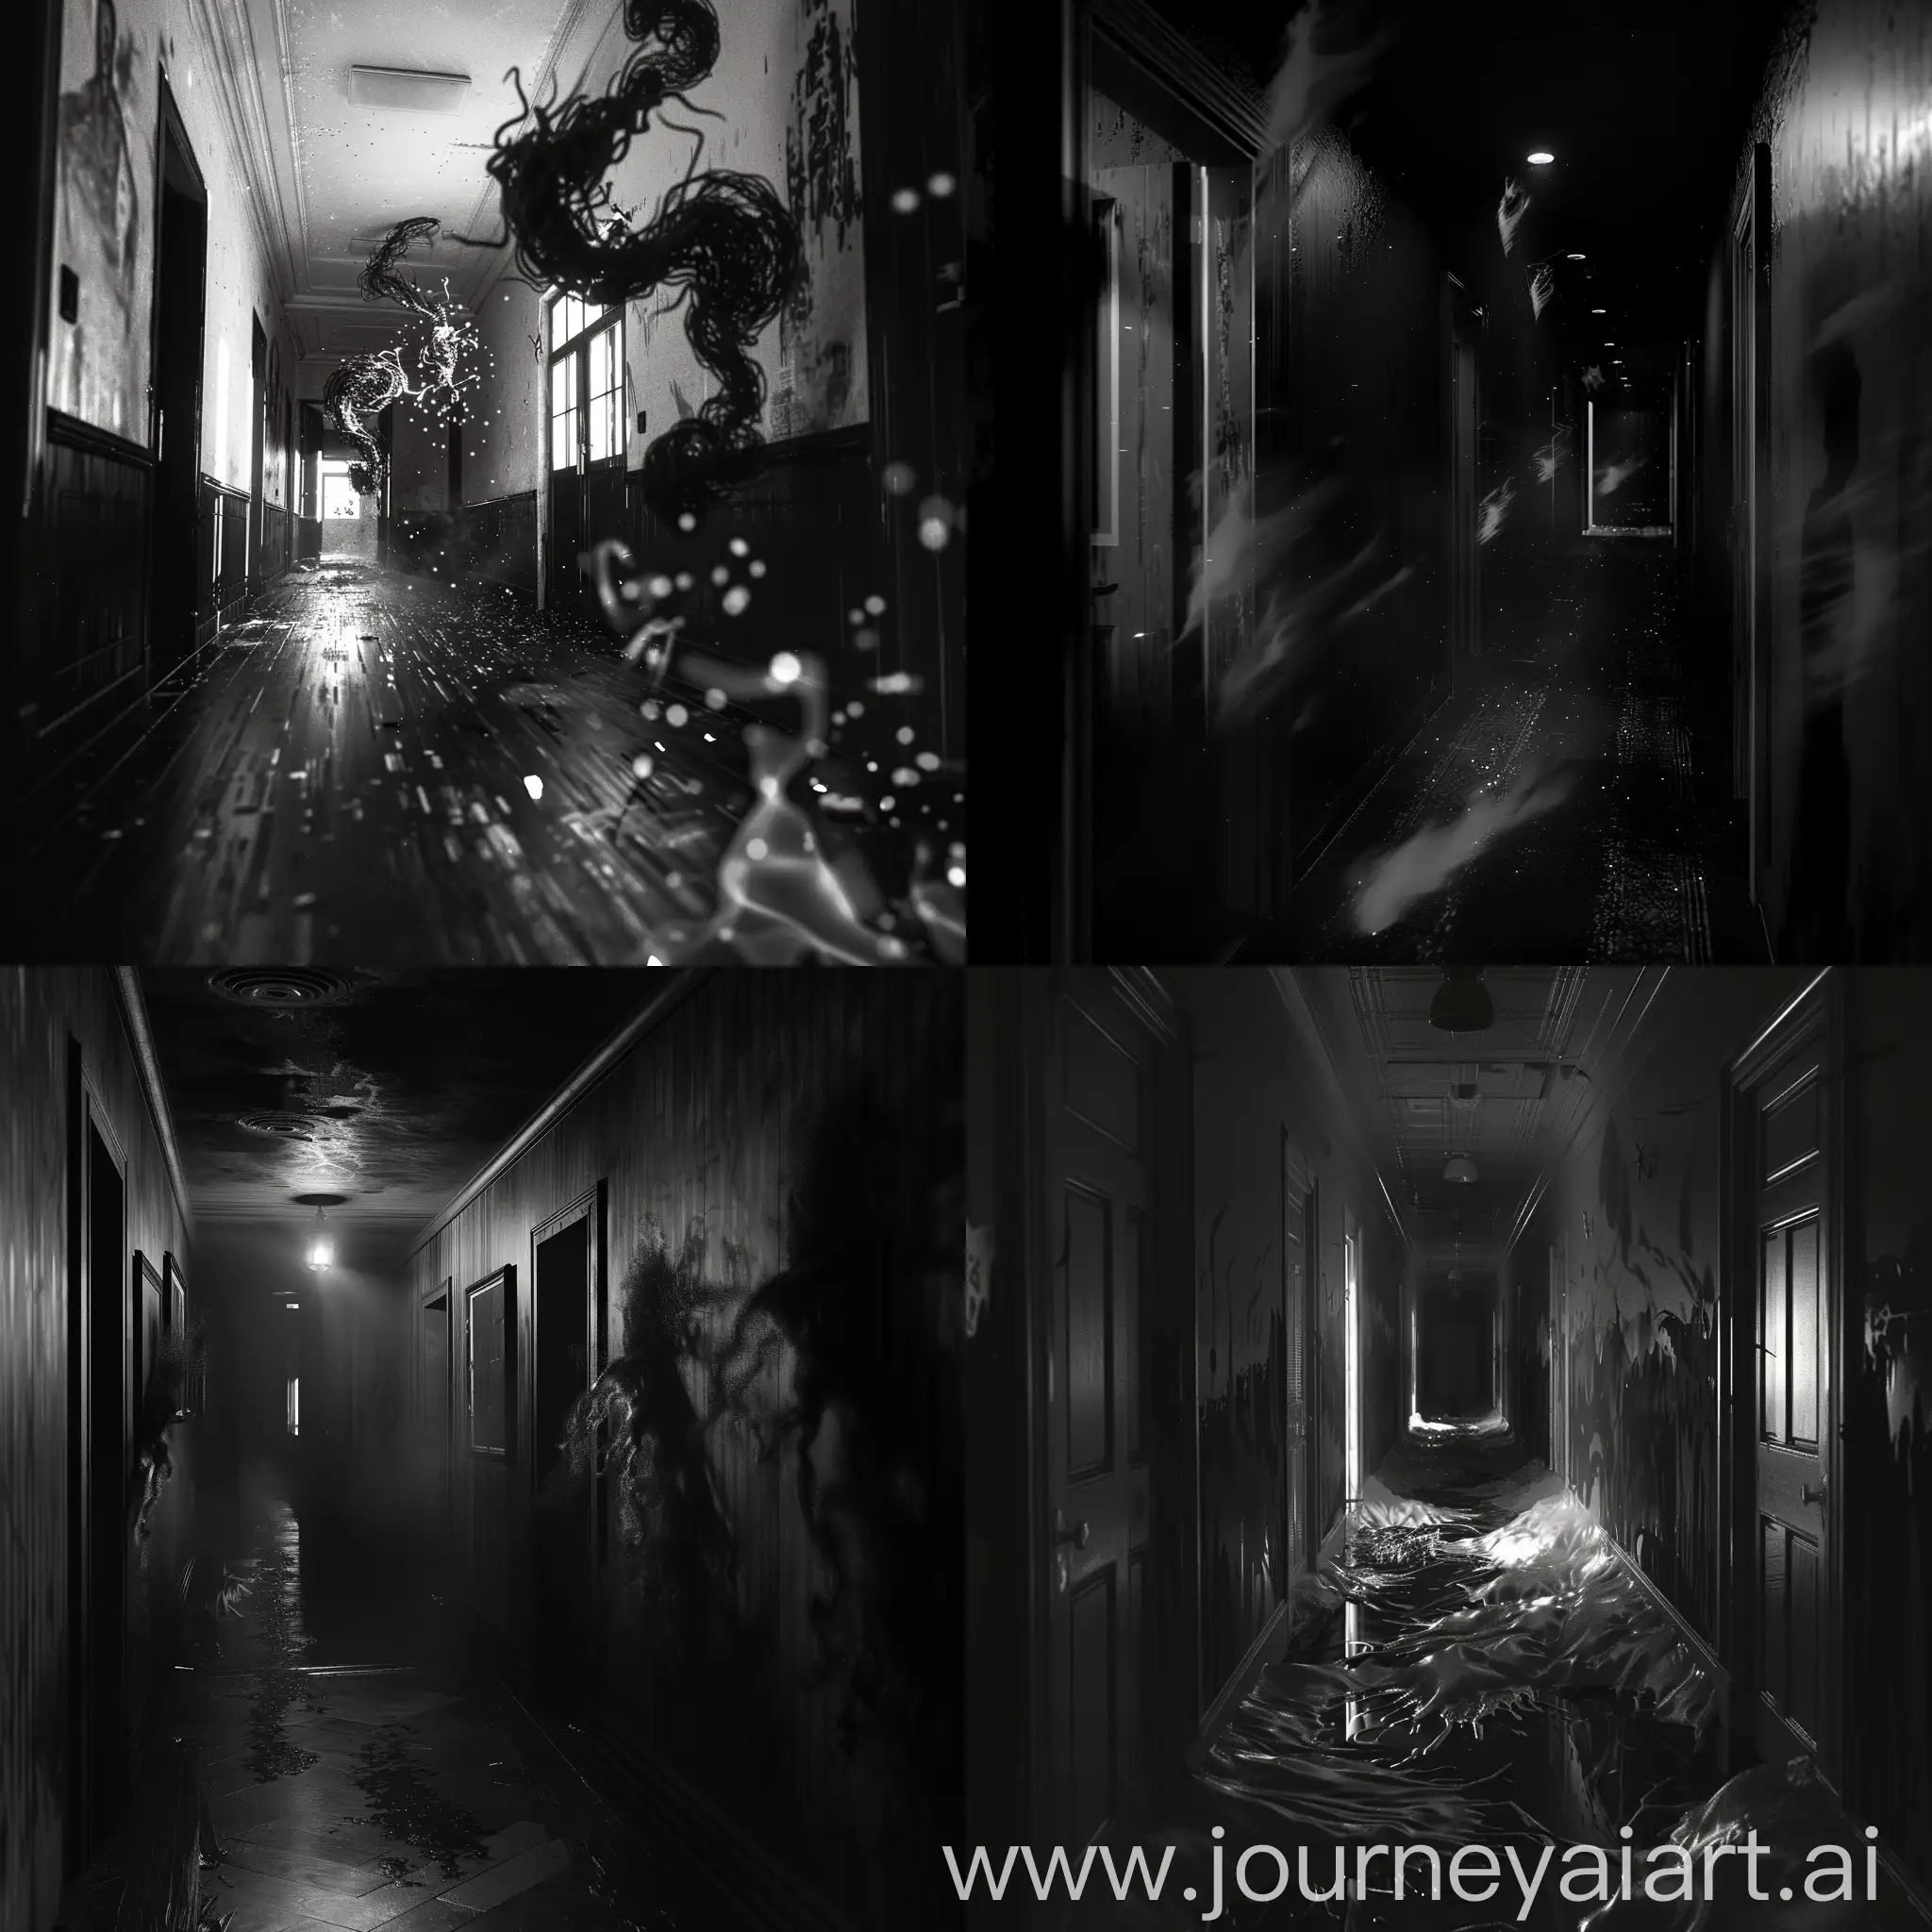 Surreal-Encounter-Dark-Entities-in-a-Communal-Apartment-Corridor